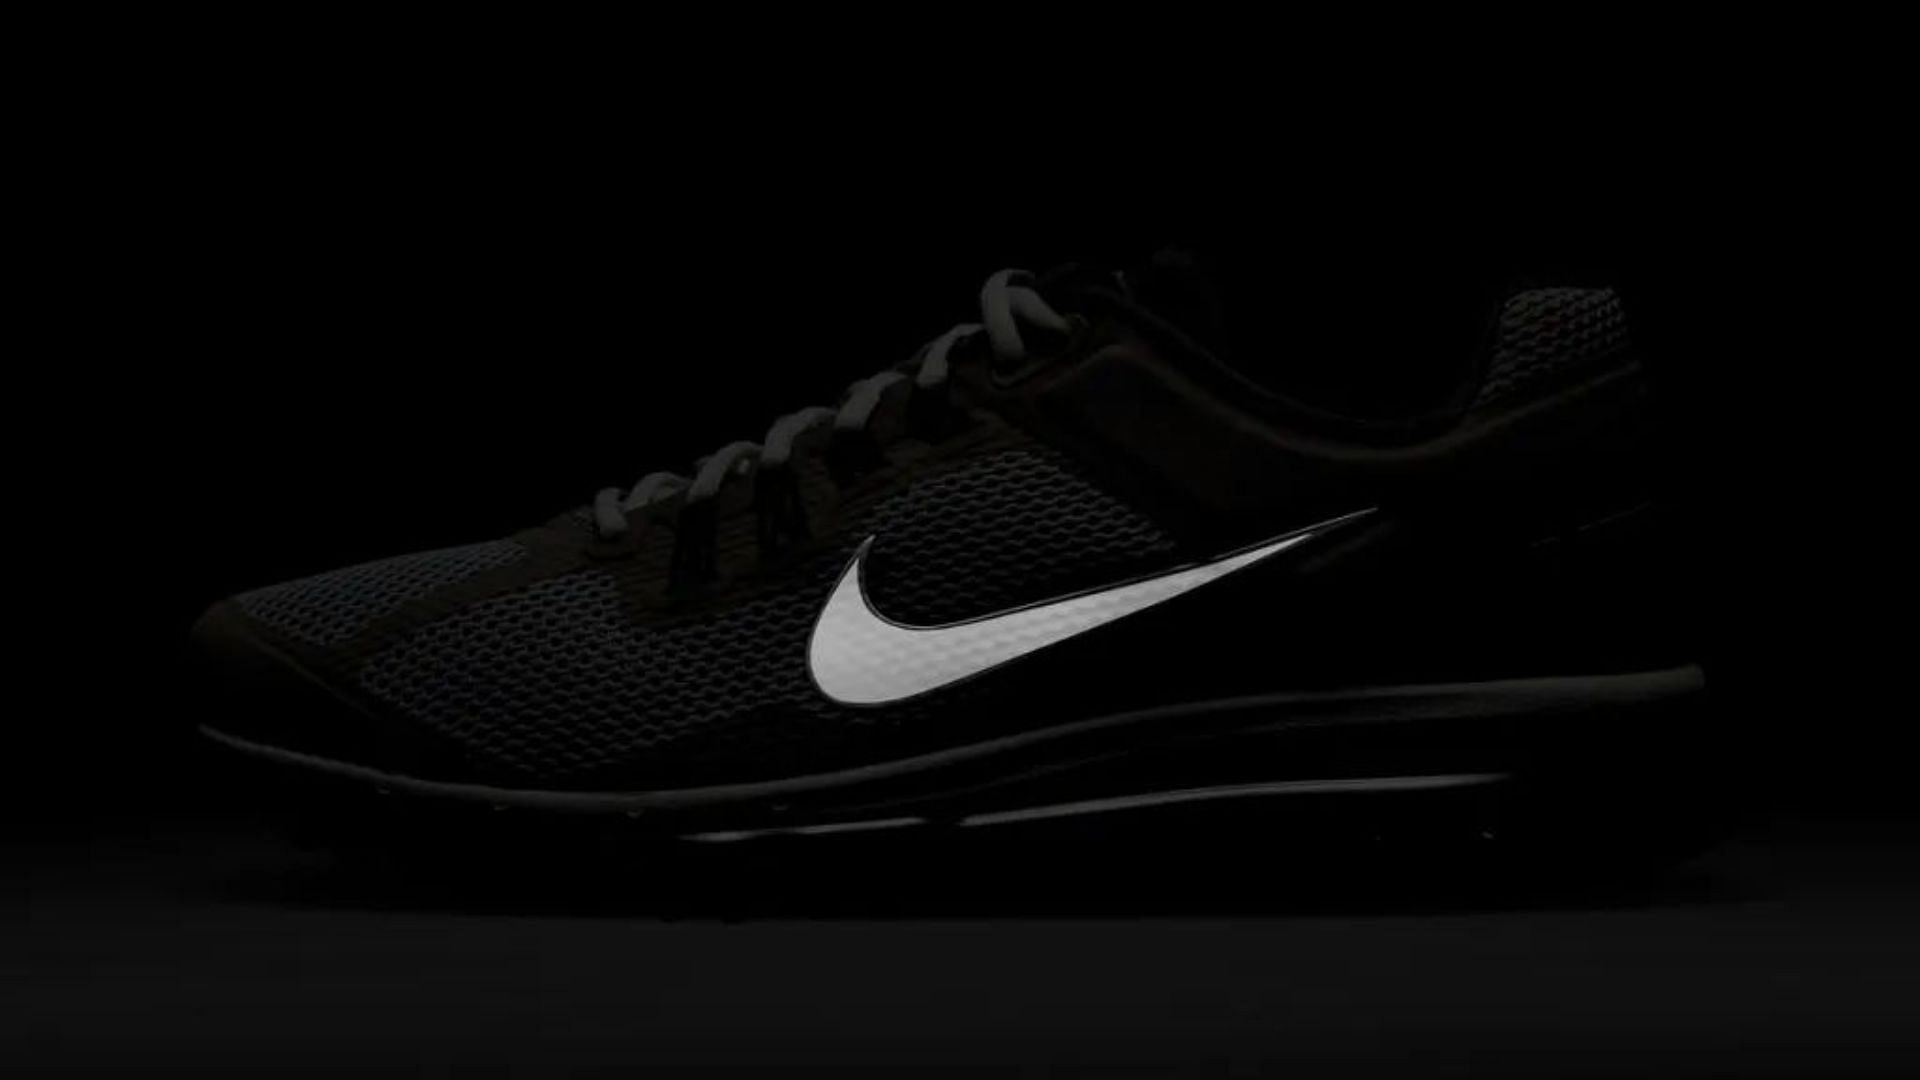 Nike: Nike Air Max 2013 “Light Bone” shoes: Where to get, price, and ...